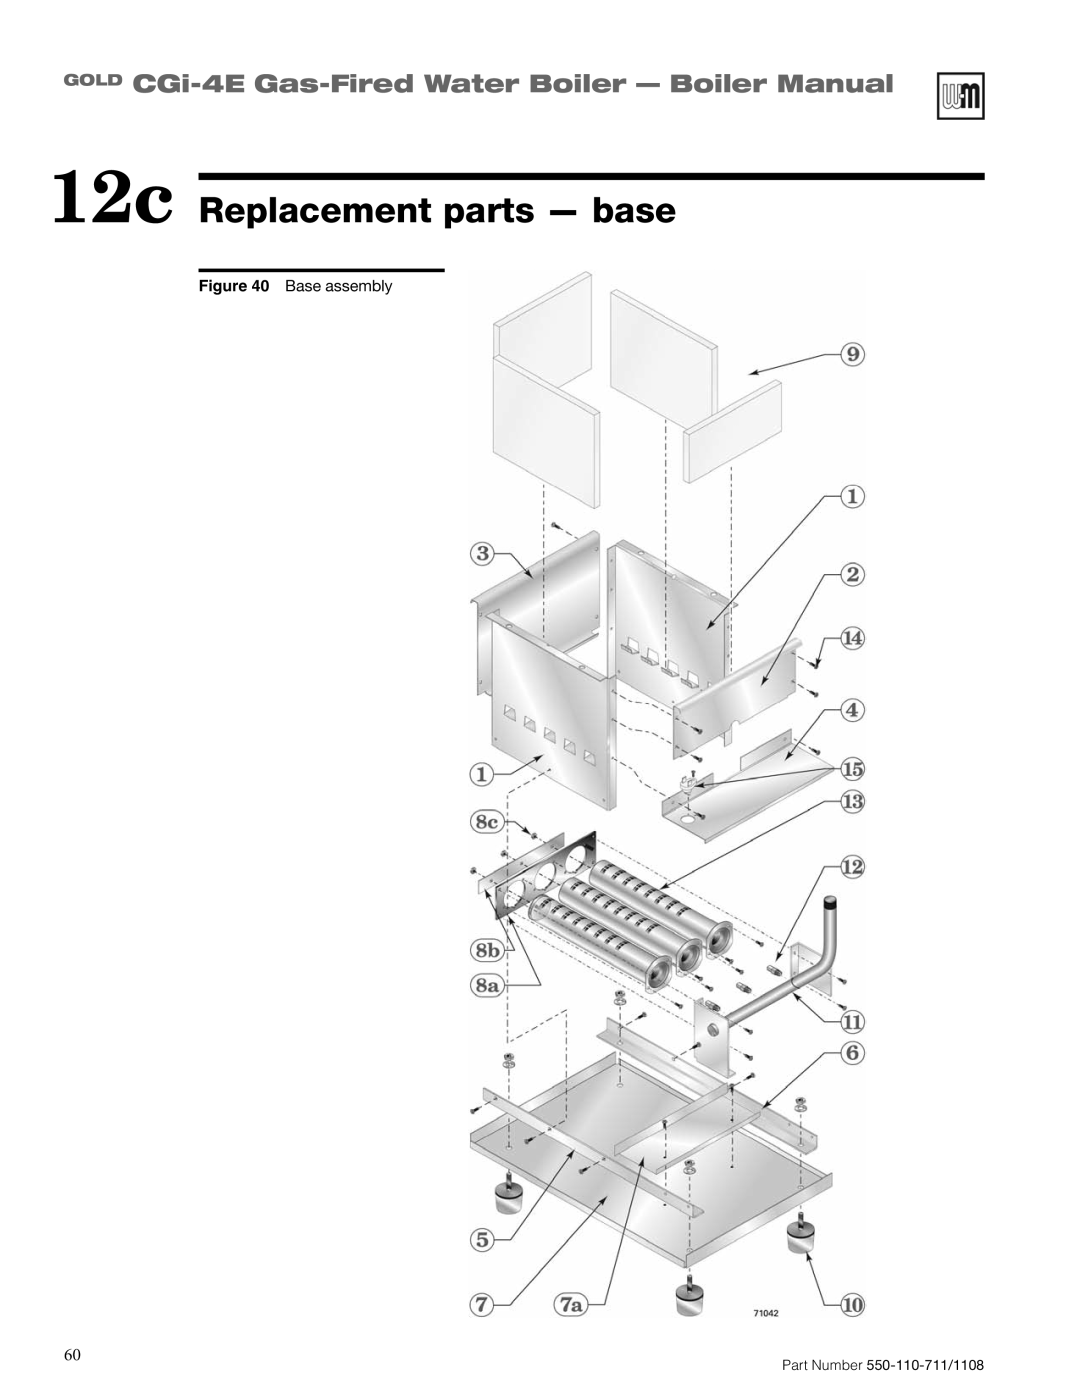 Weil-McLain CGI-4E manual 12c Replacement parts - base, GOLD CGi-4E Gas-FiredWater Boiler - Boiler Manual, Base assembly 